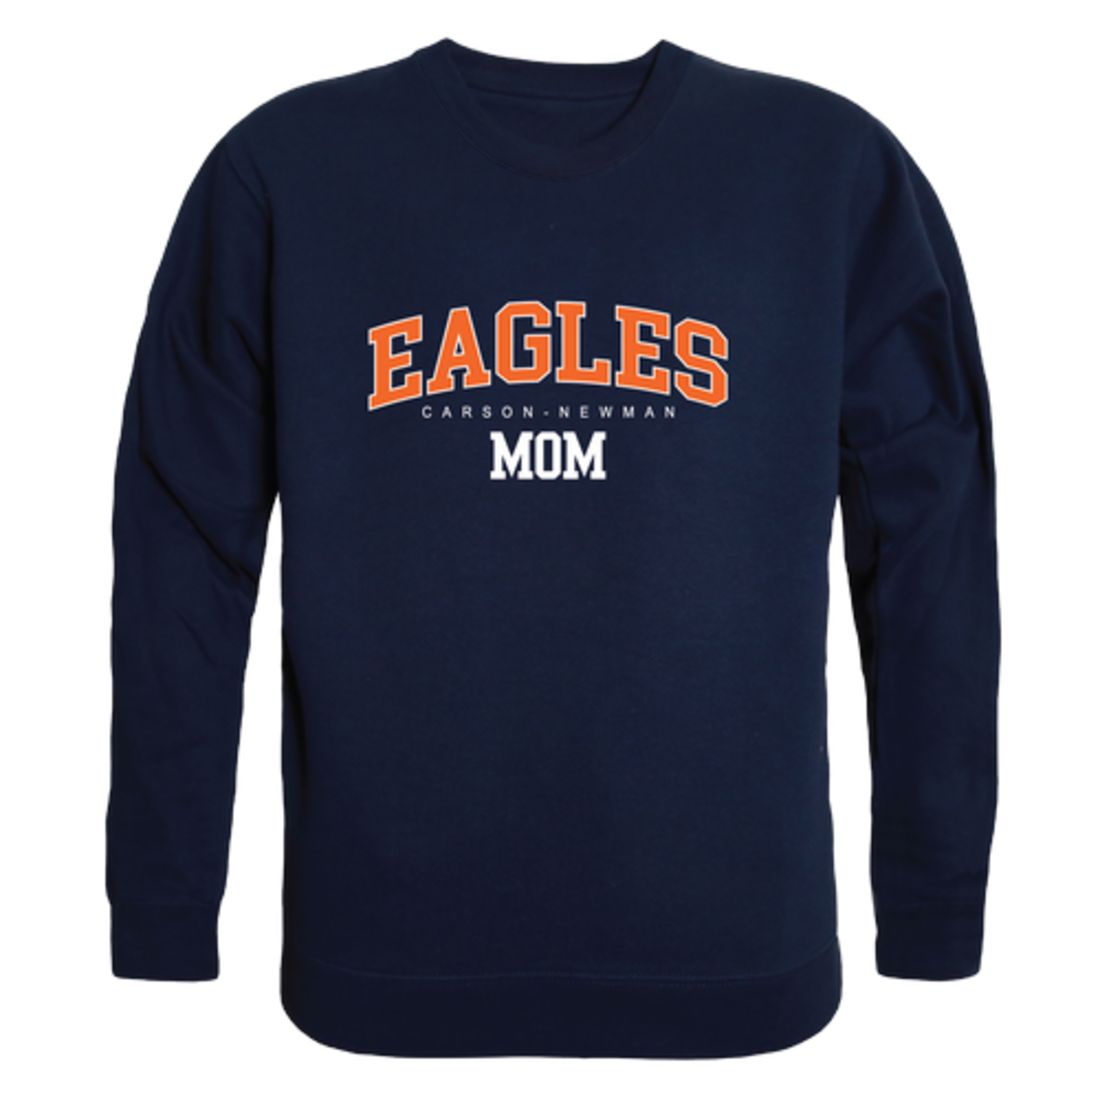 Carson-Newman University Eagles Mom Crewneck Sweatshirt